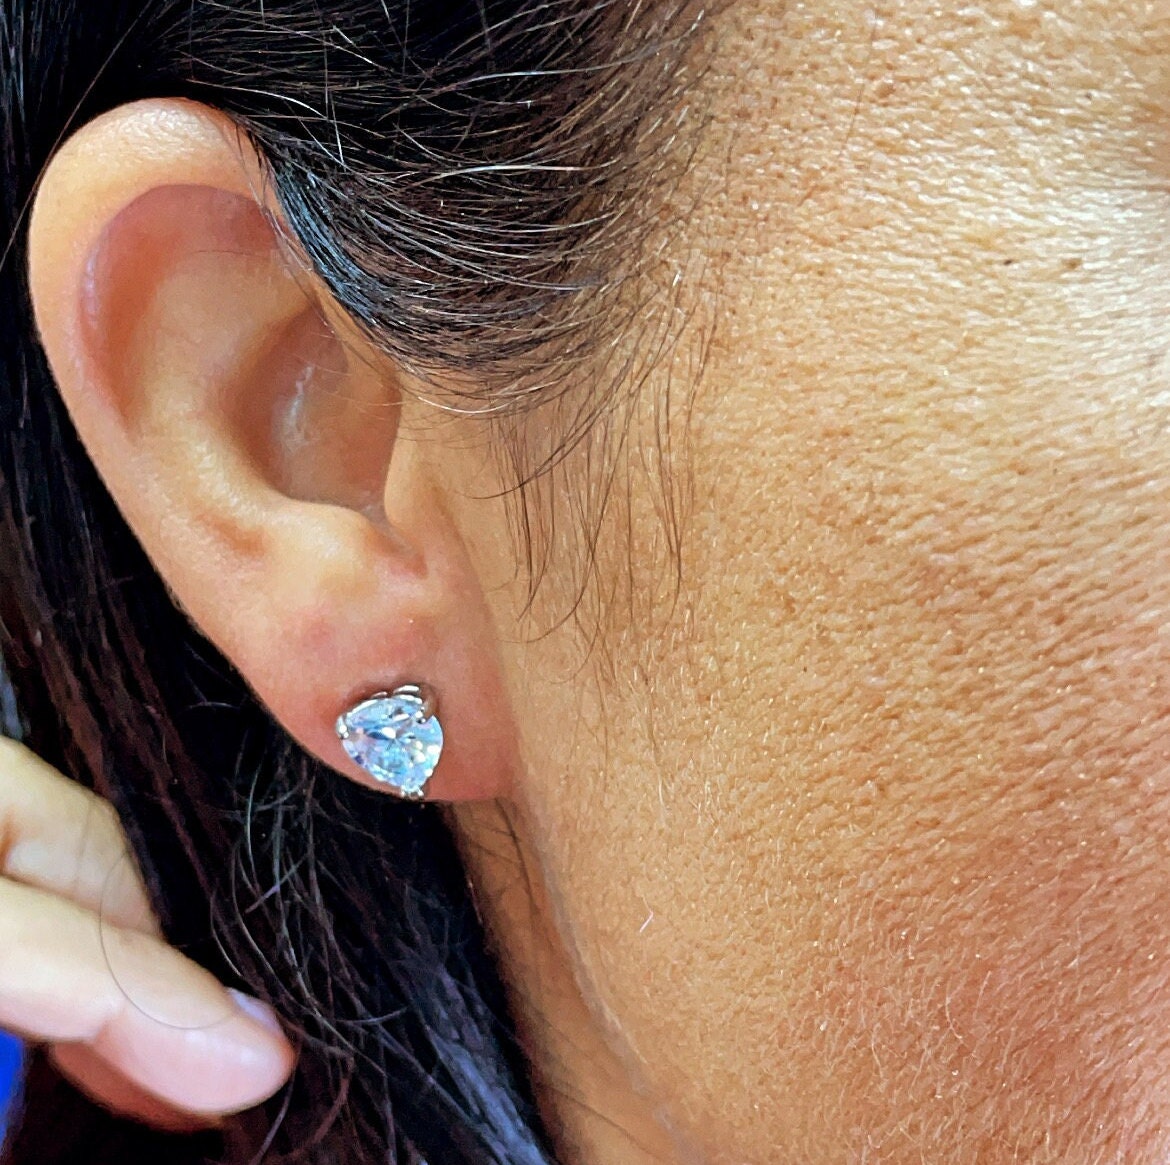 18k Silver Layered 9mm Heart Shape Cubic Zirconia Stud Earrings For Wholesale